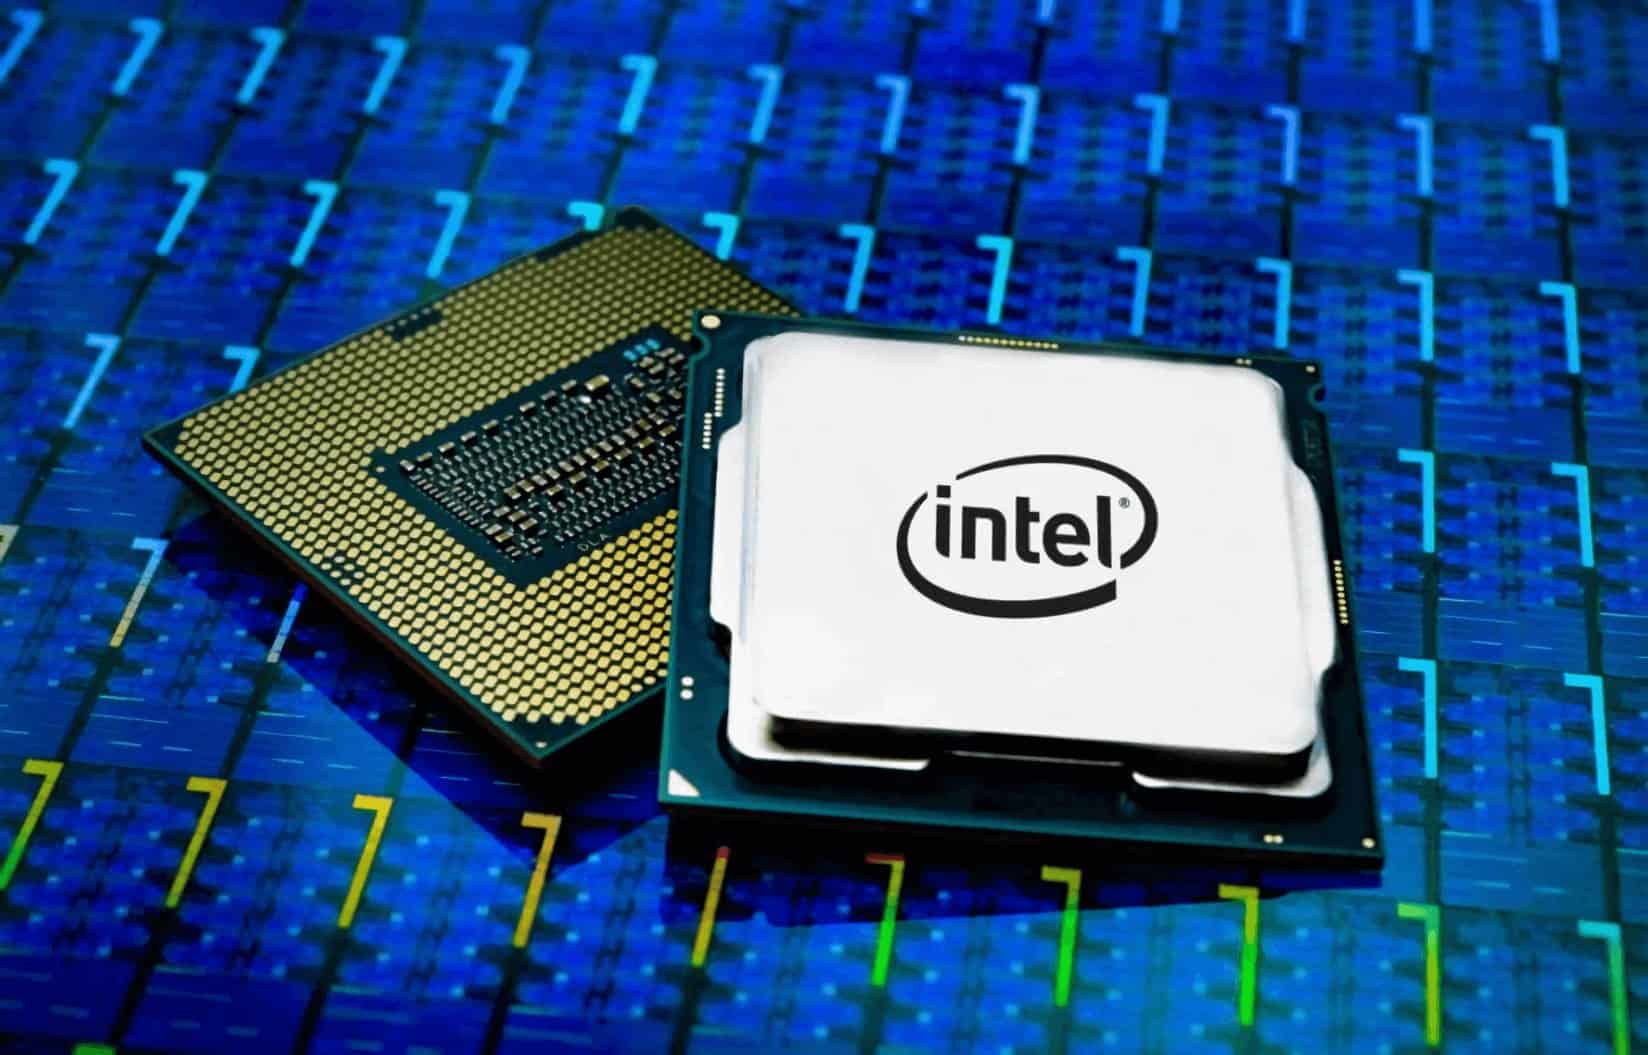 Intel processor vulnerability